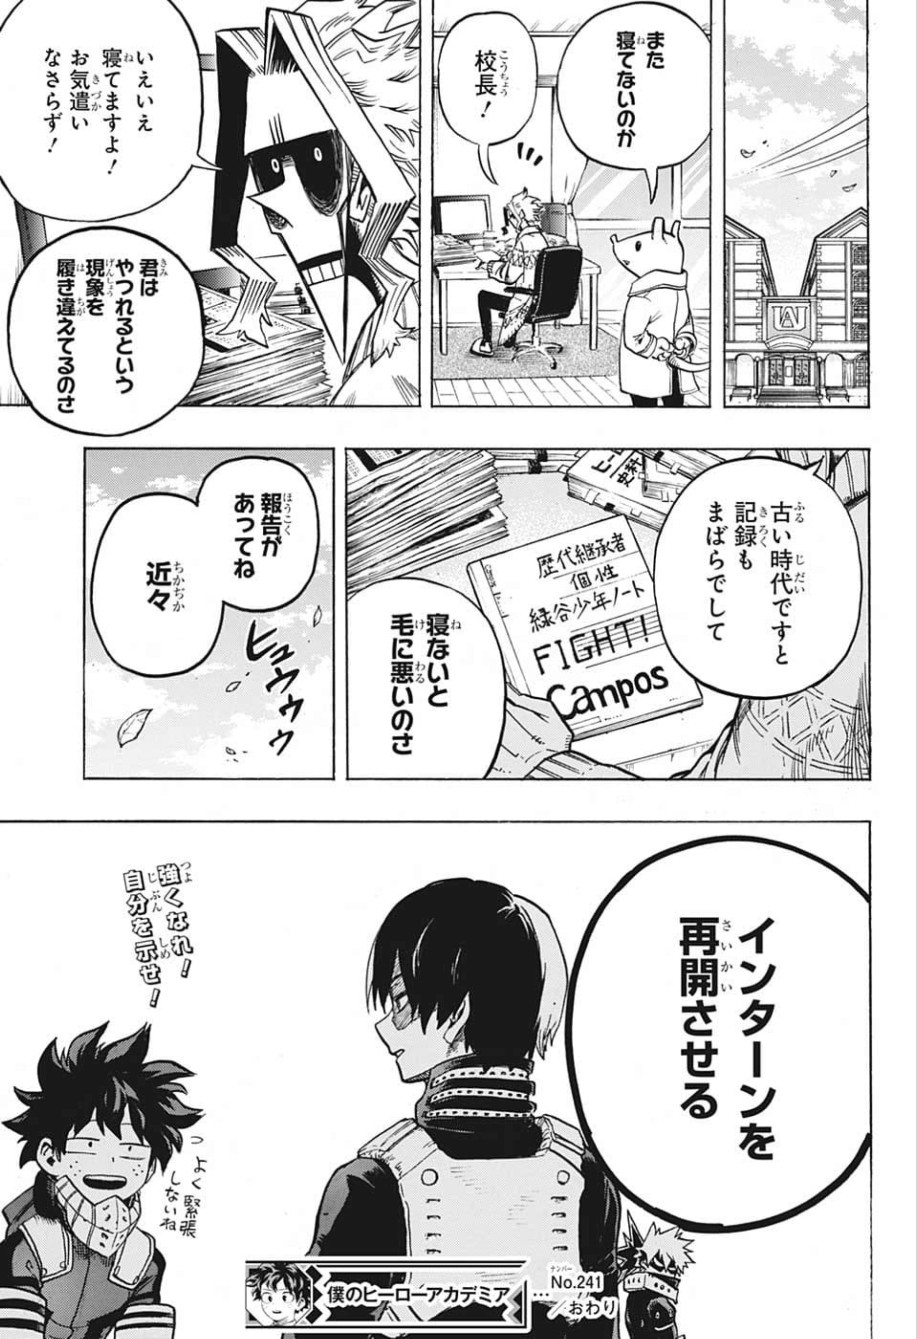 Boku no Hero Academia - Chapter 241 - Page 17